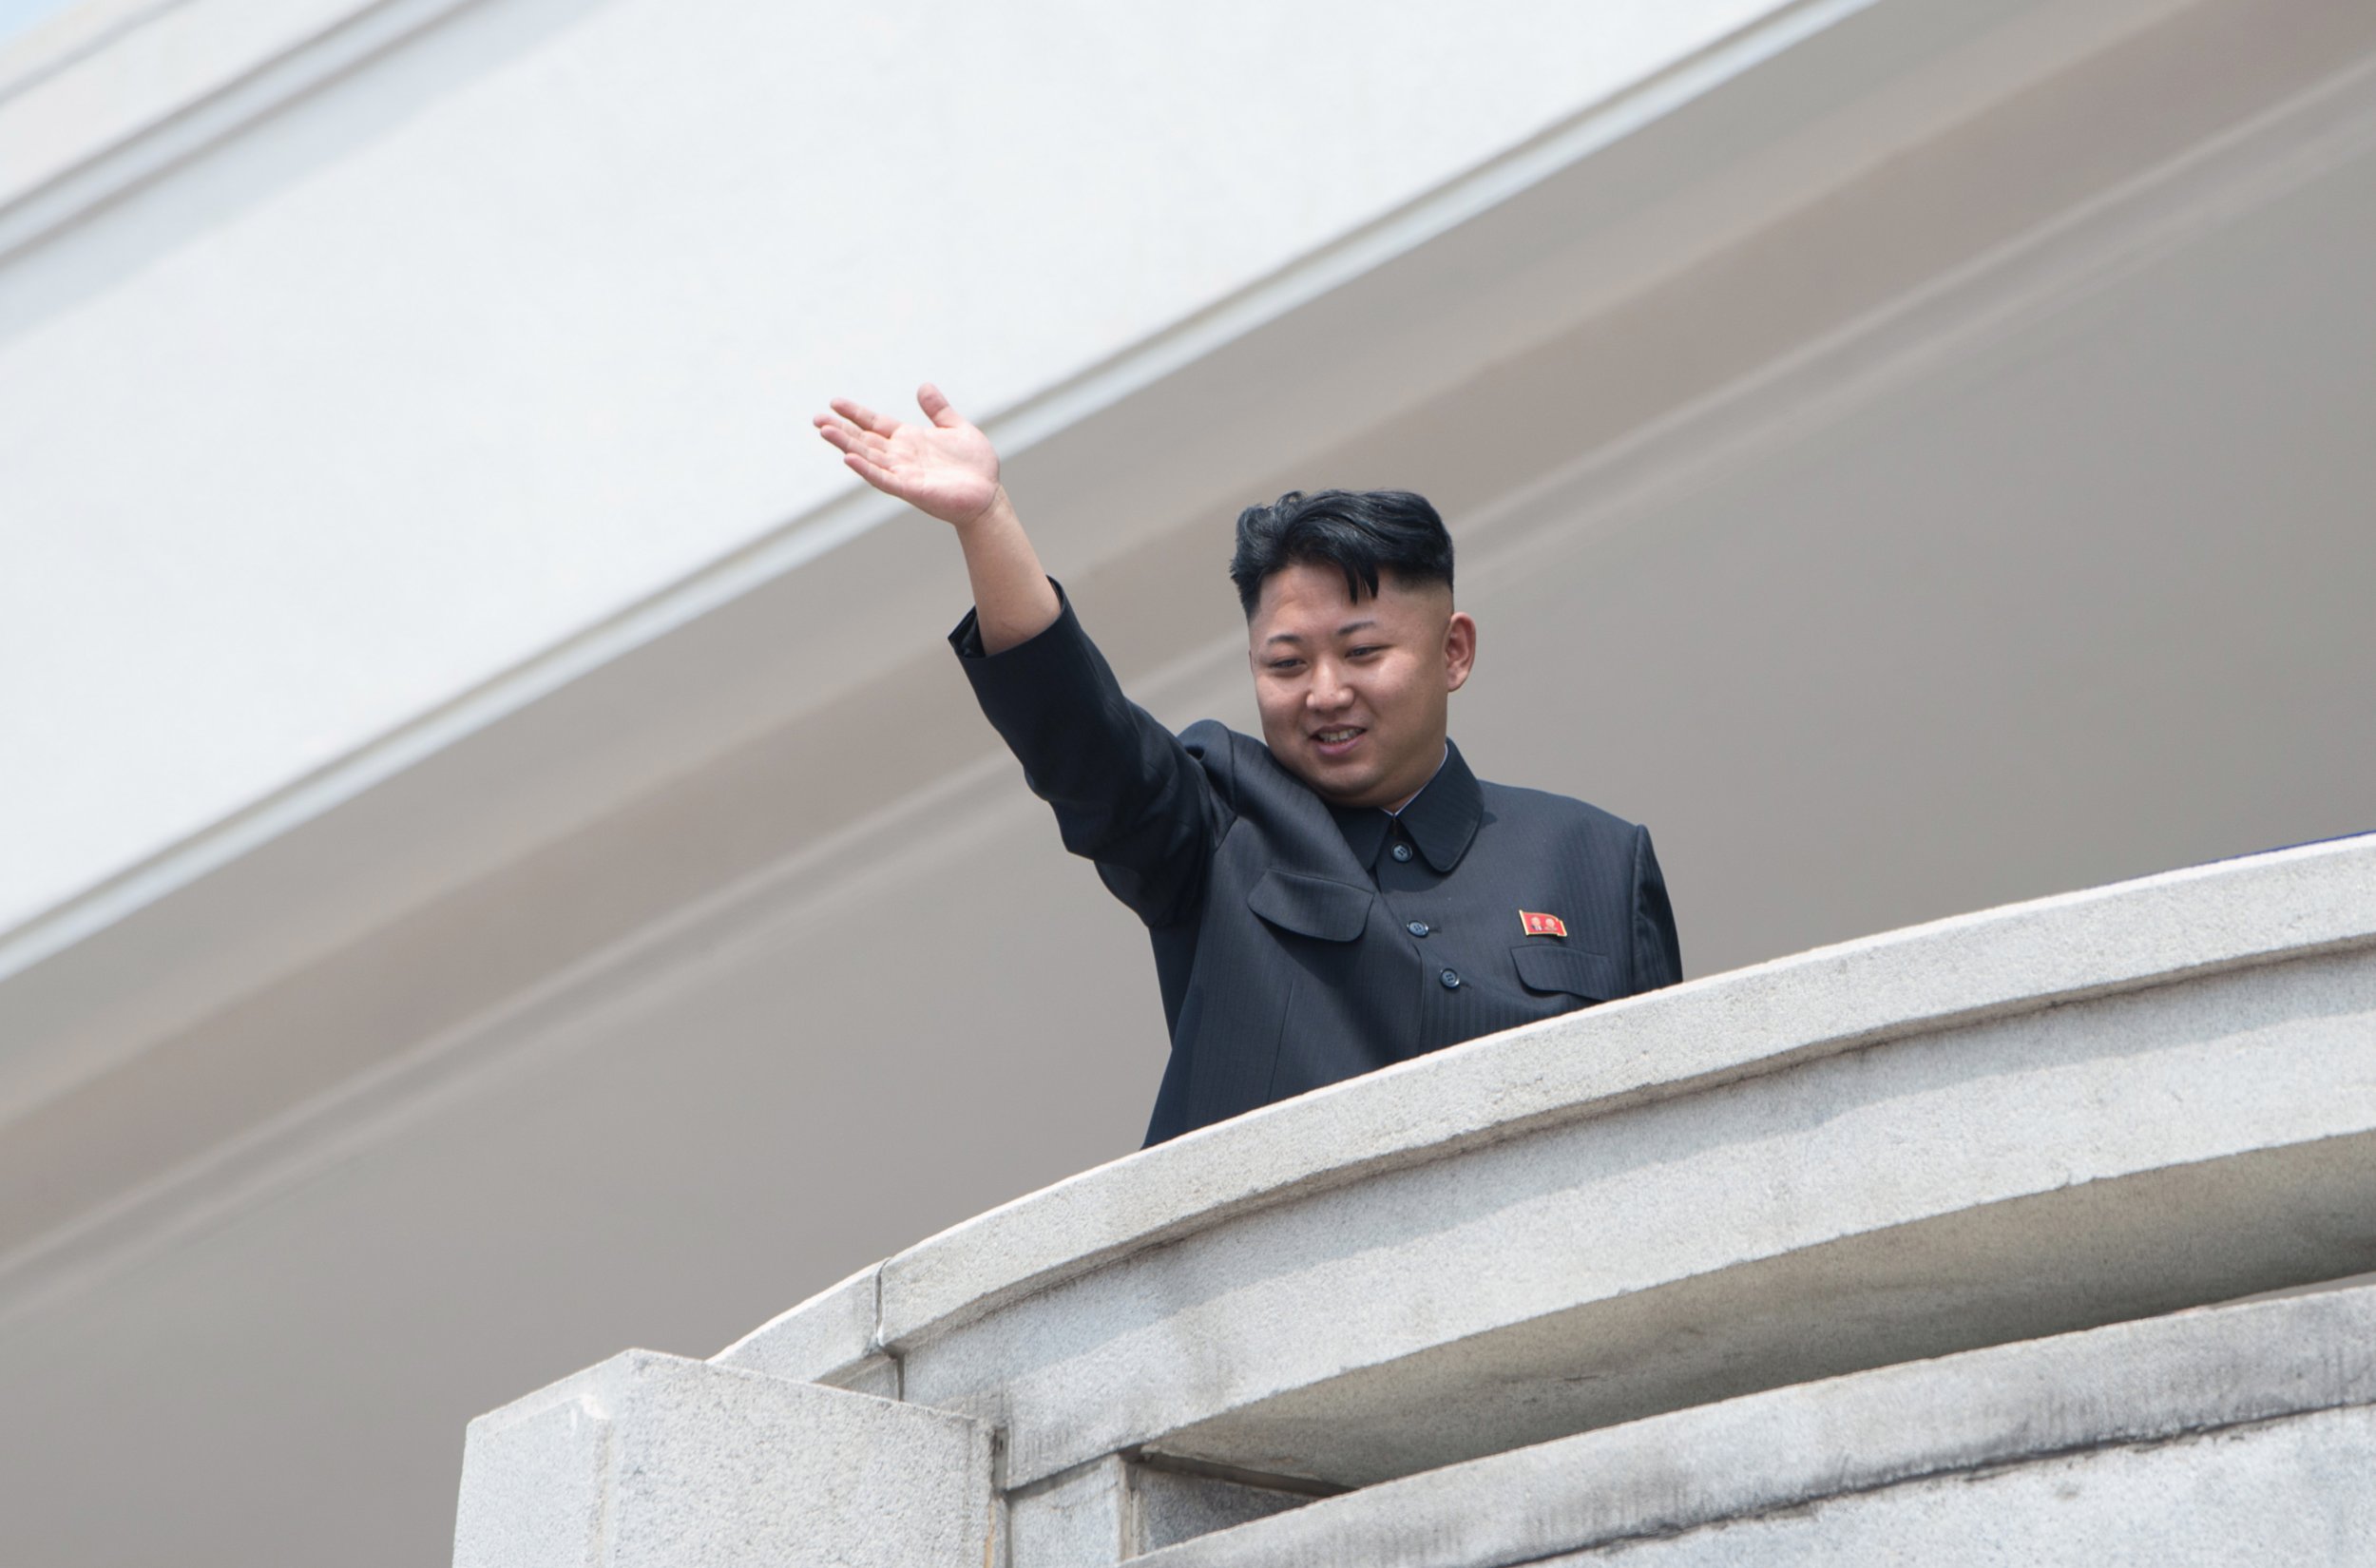 North Korea Kim Jong-Un